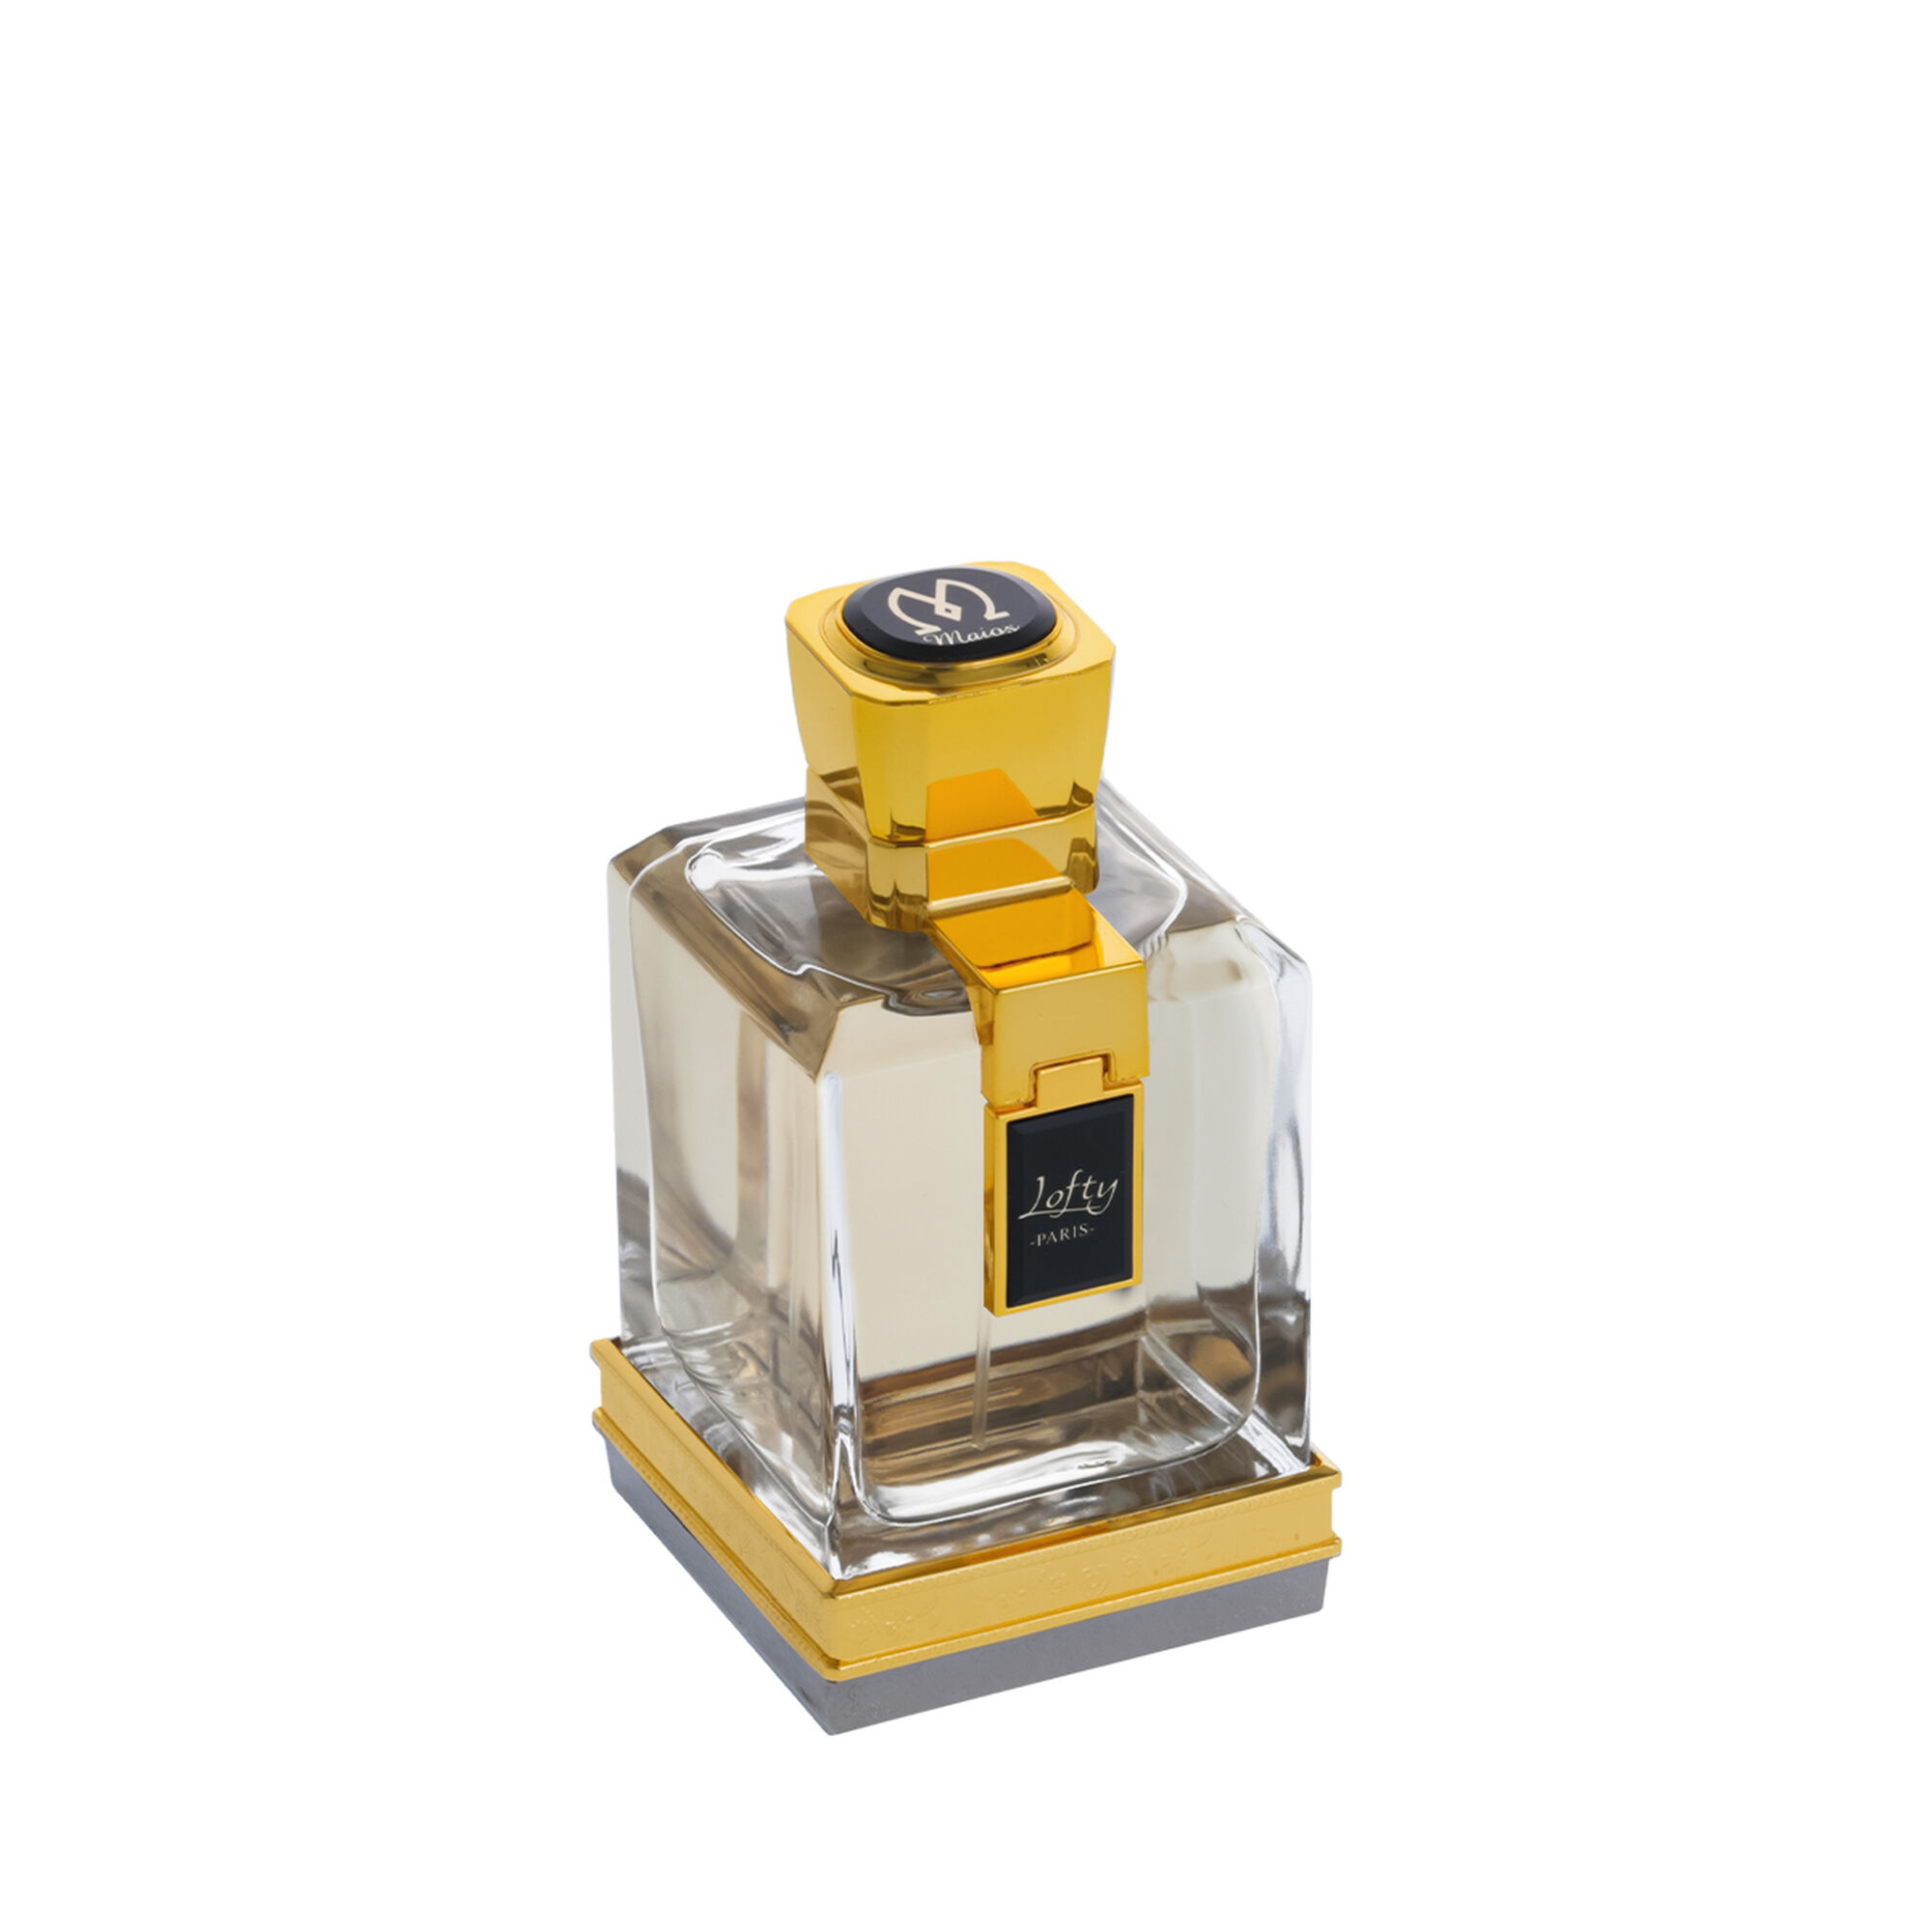 Lofty Perfume by Maios 100ml 150 ml